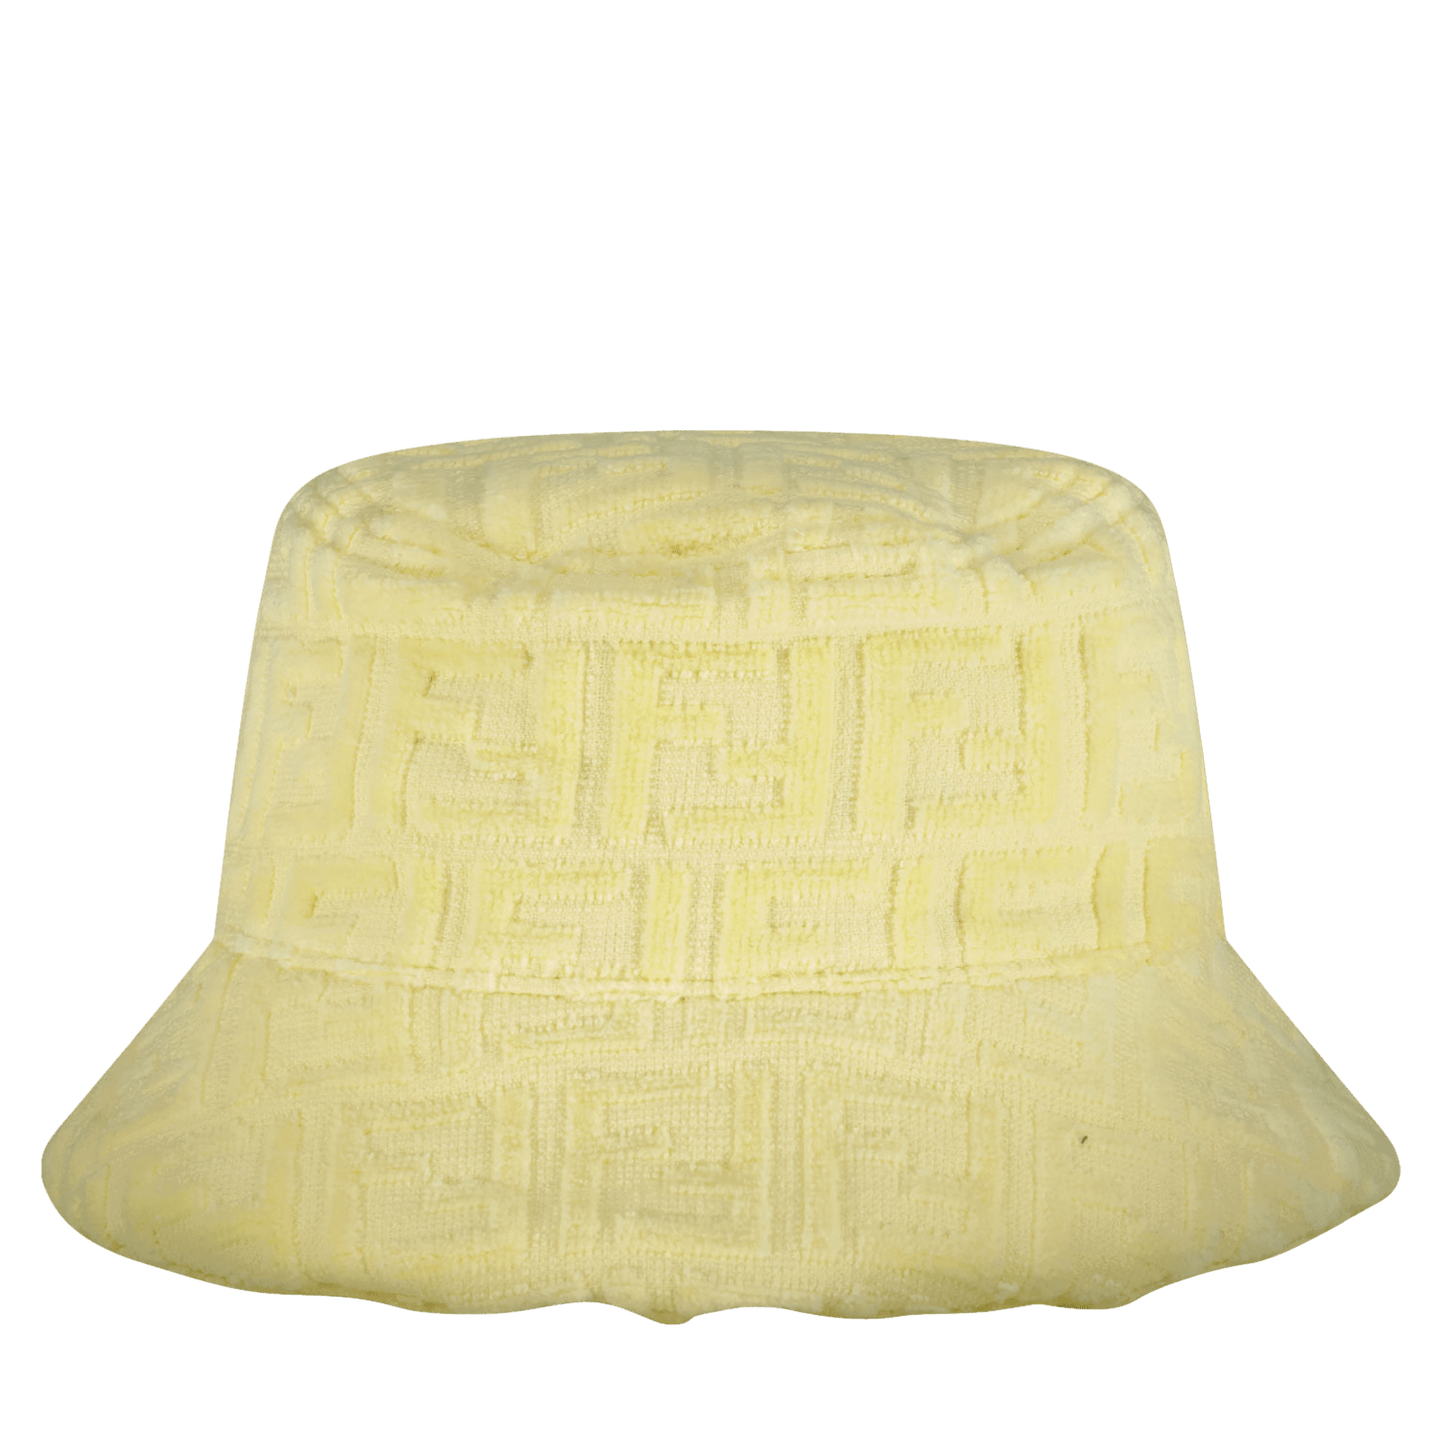 Fendi Baby Unisex Hat Yellow